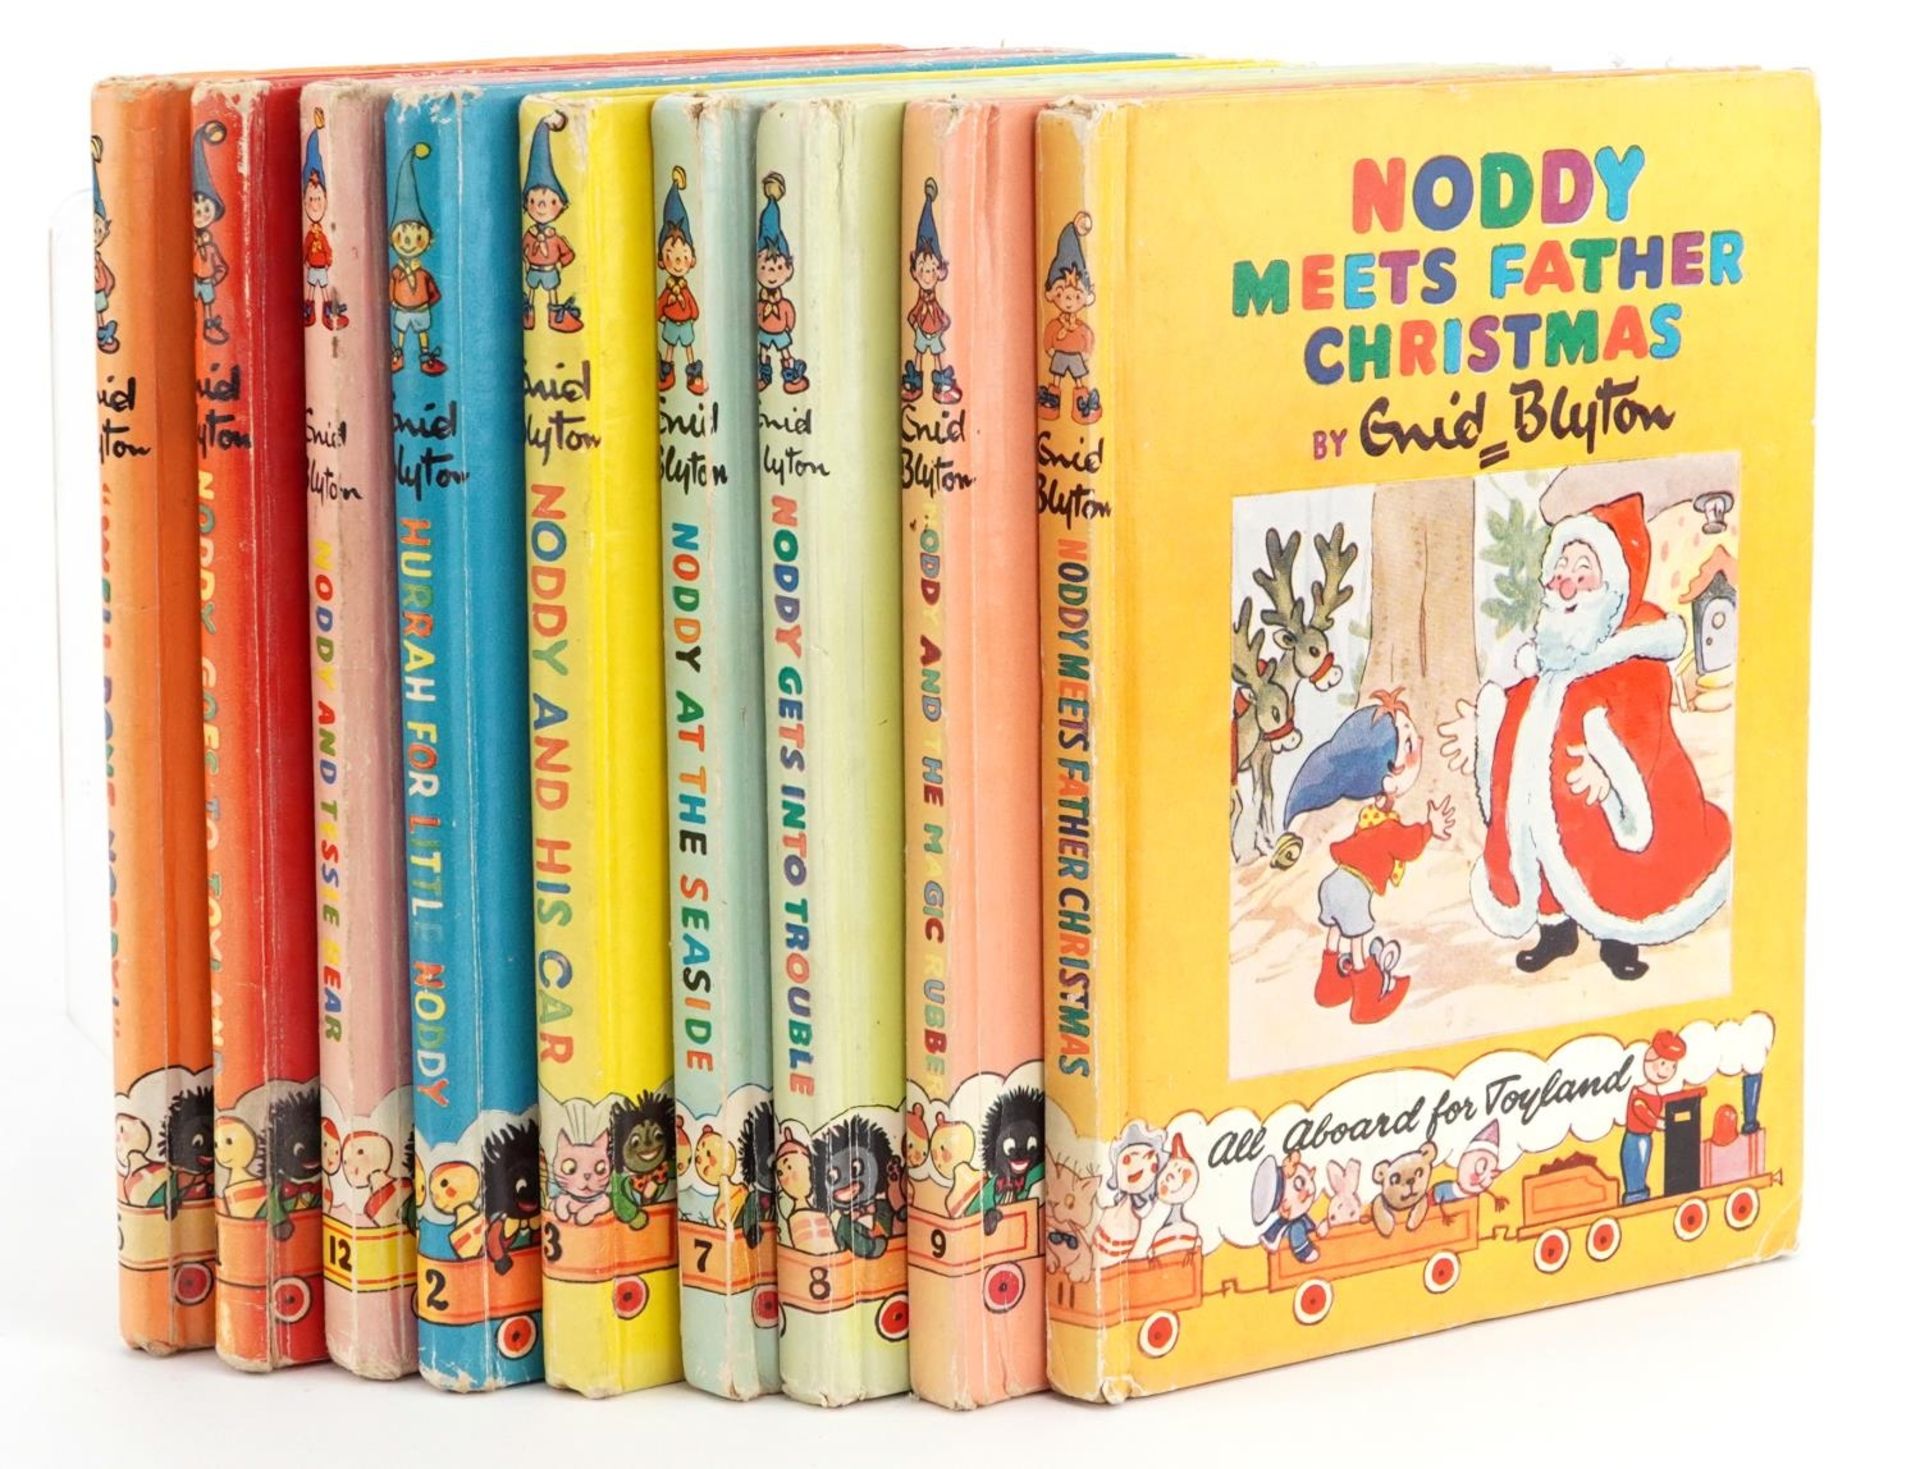 Nine Noddy hardback books by Enid Blyton including Noddy Meets Father Christmas : For further